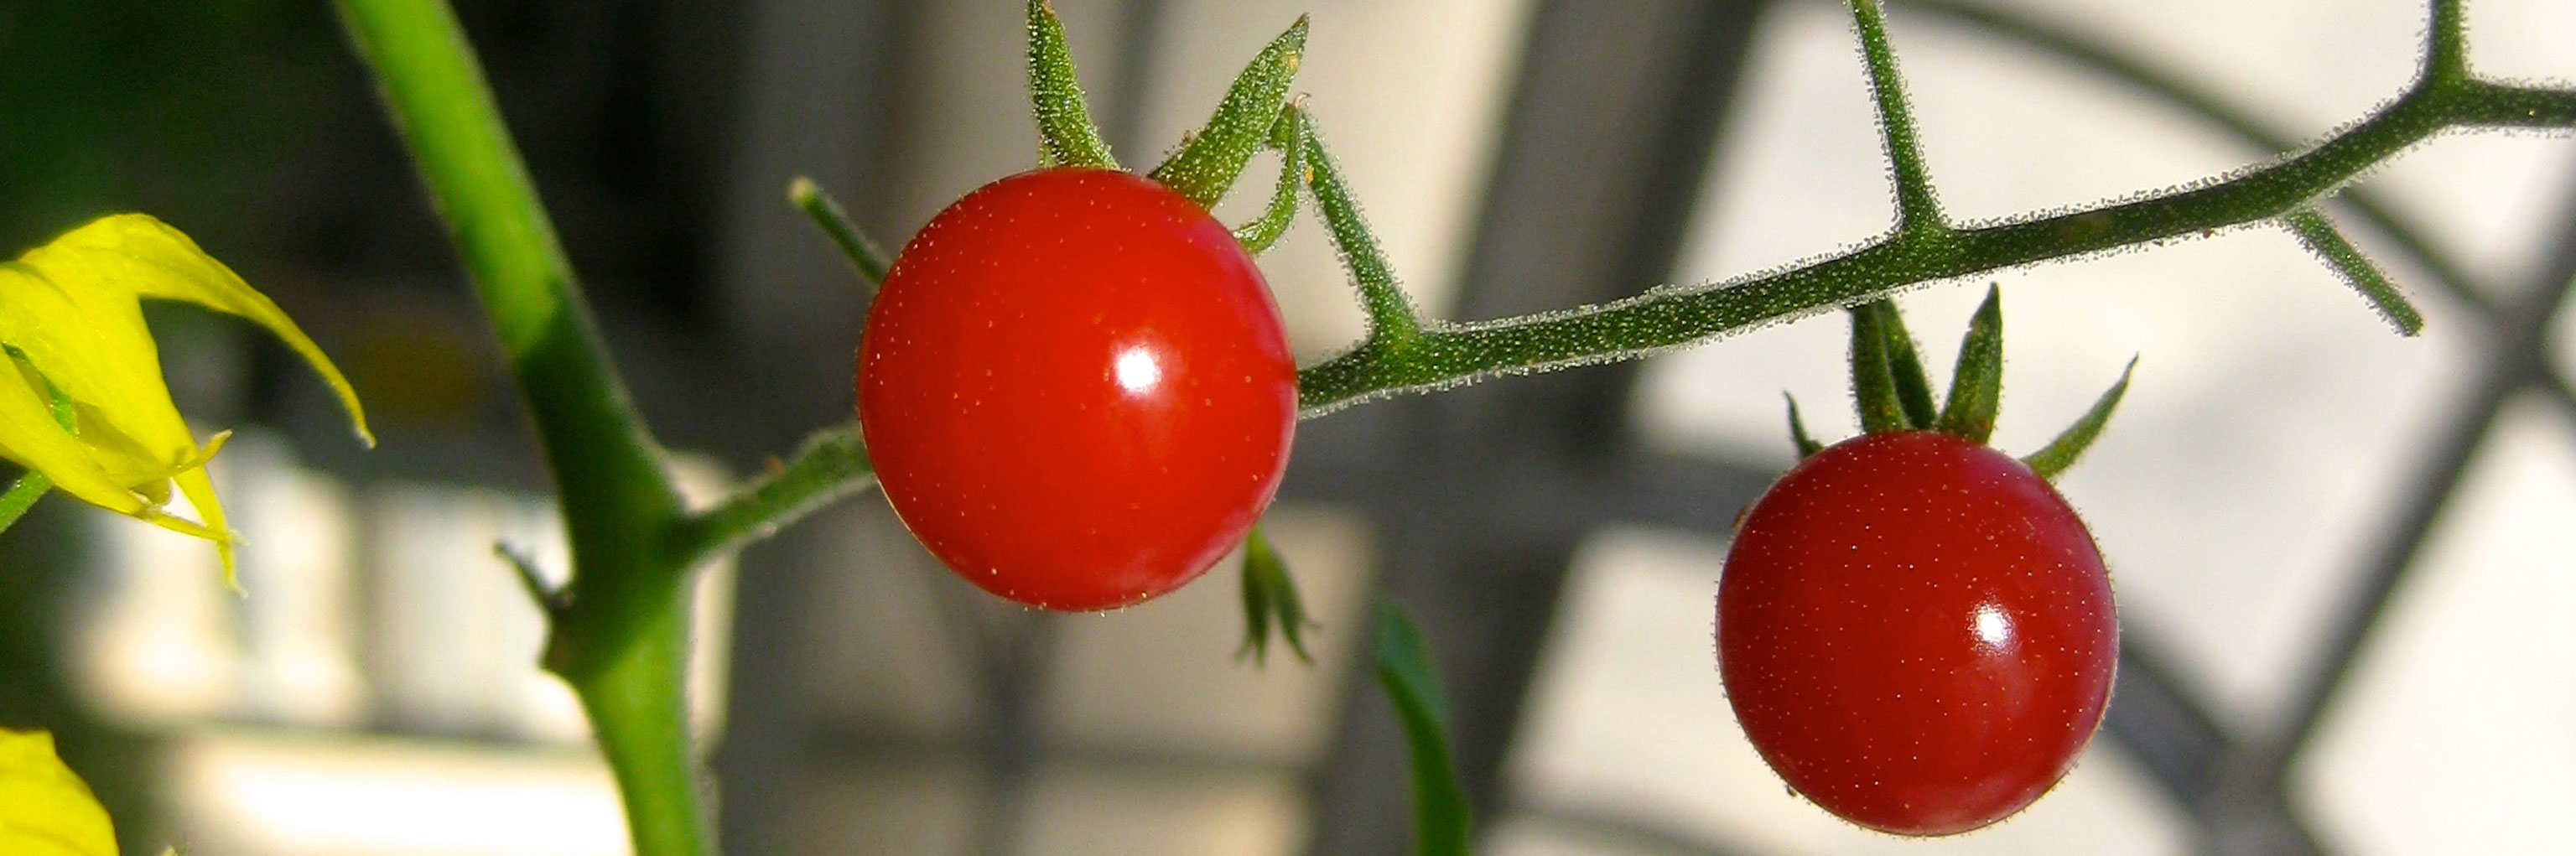 Close up of a cherry tomato